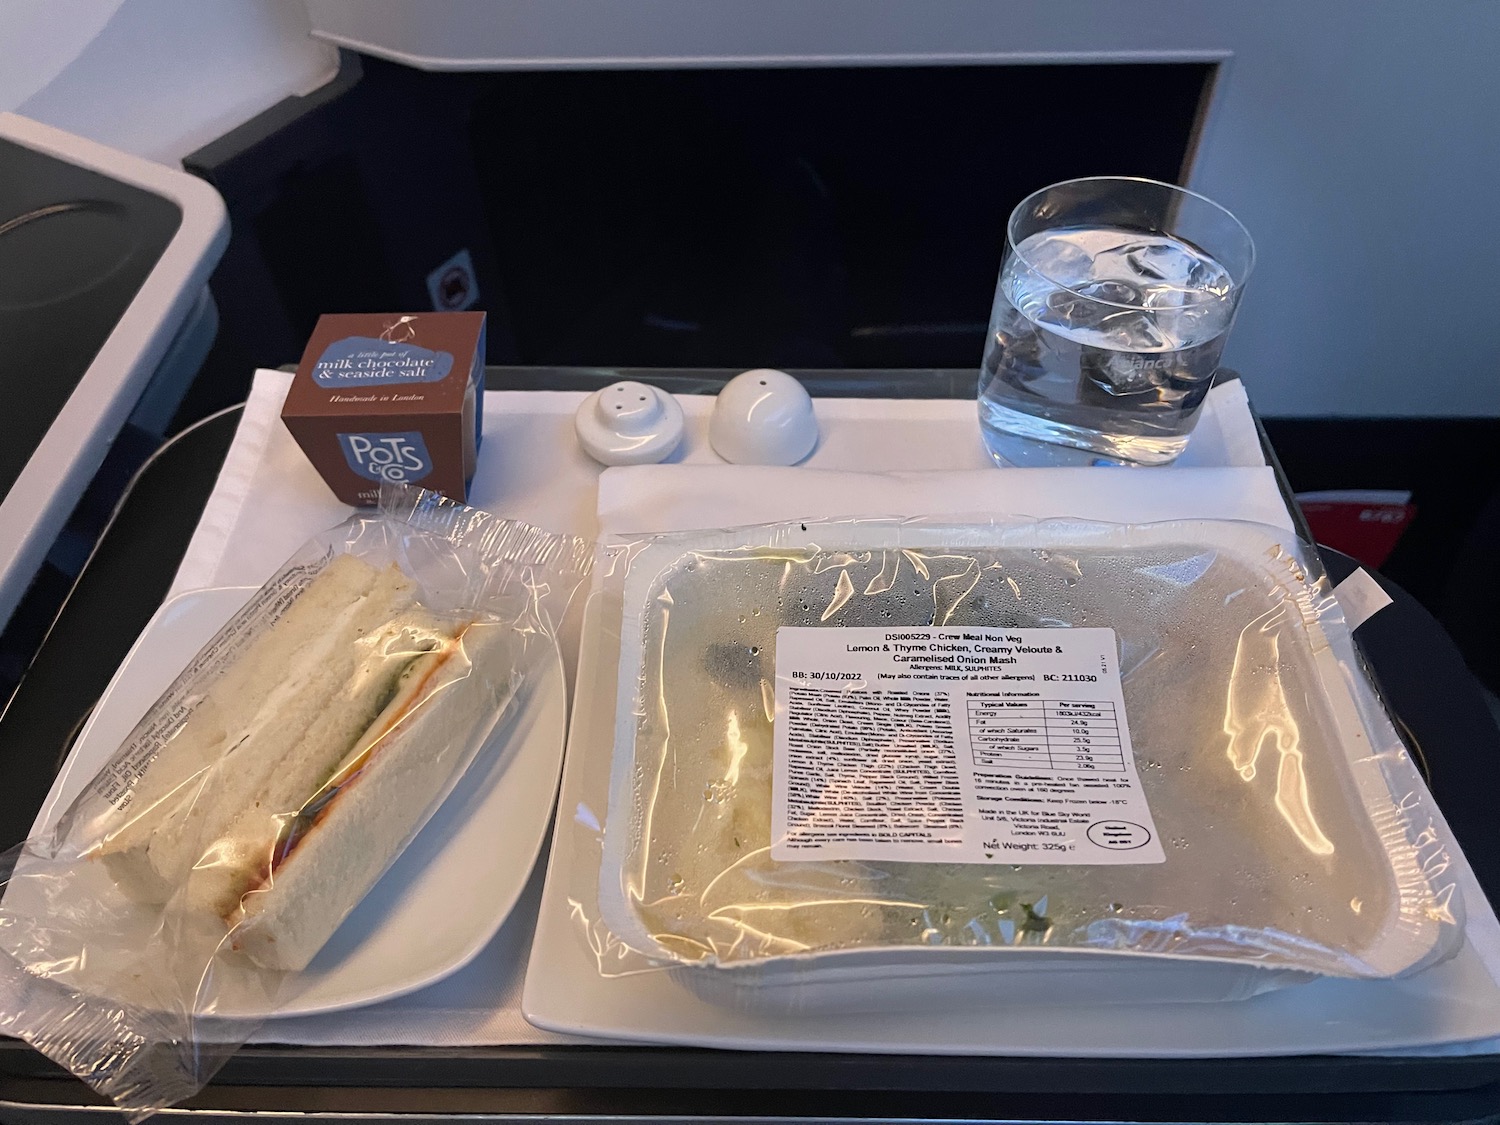 a sandwich and sandwich on a tray